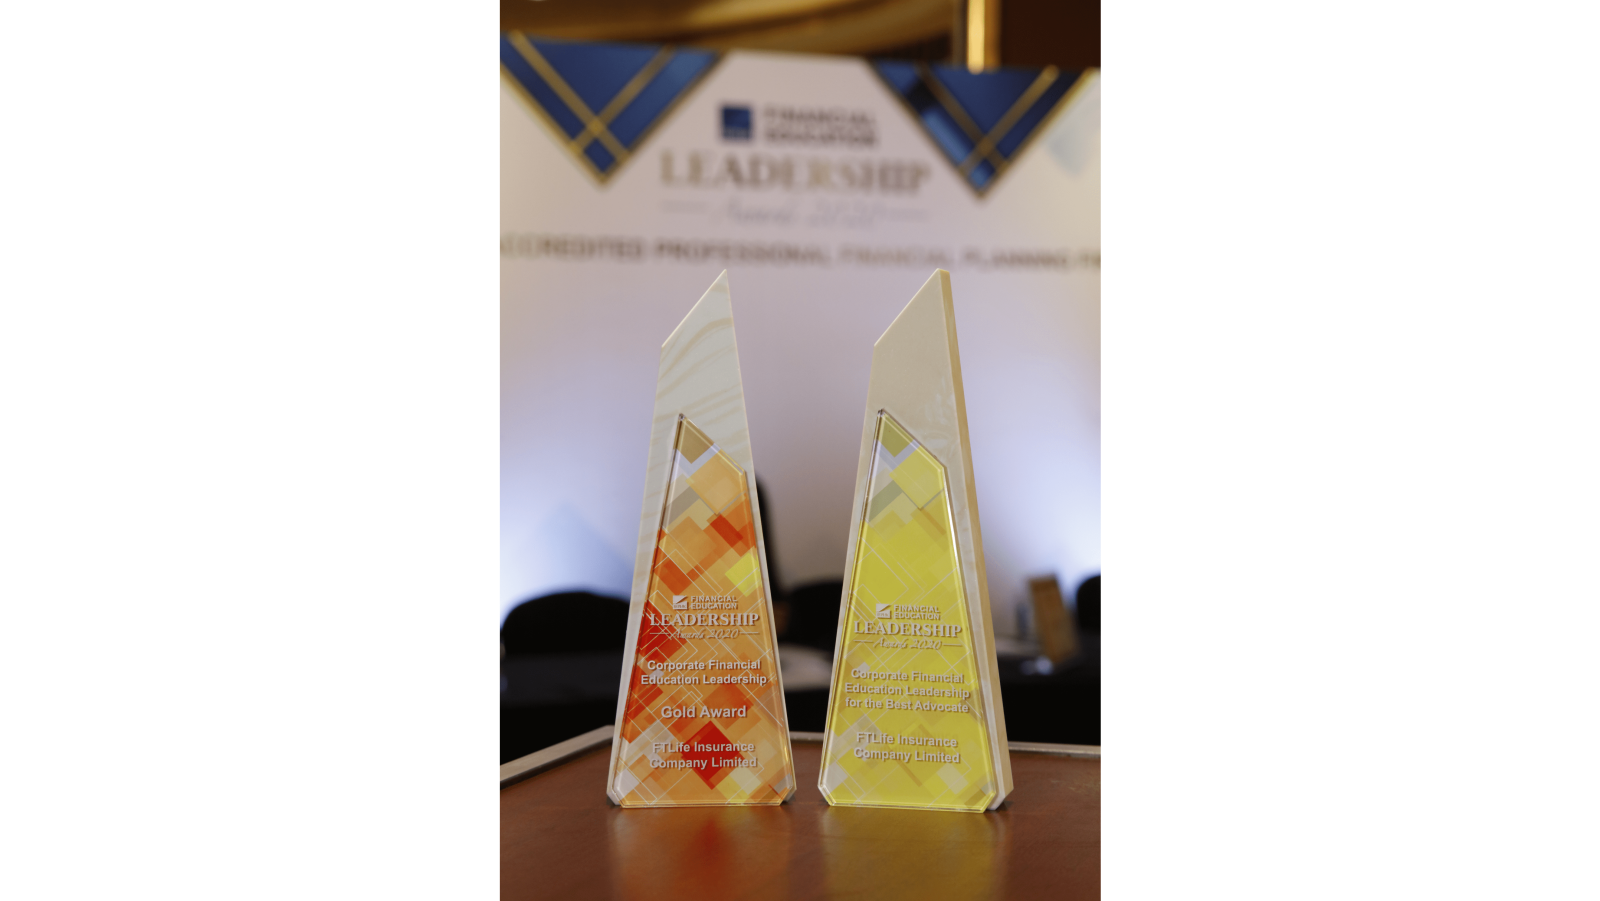 FTLife won two awards at the IFPHK Financial Education Leadership Awards